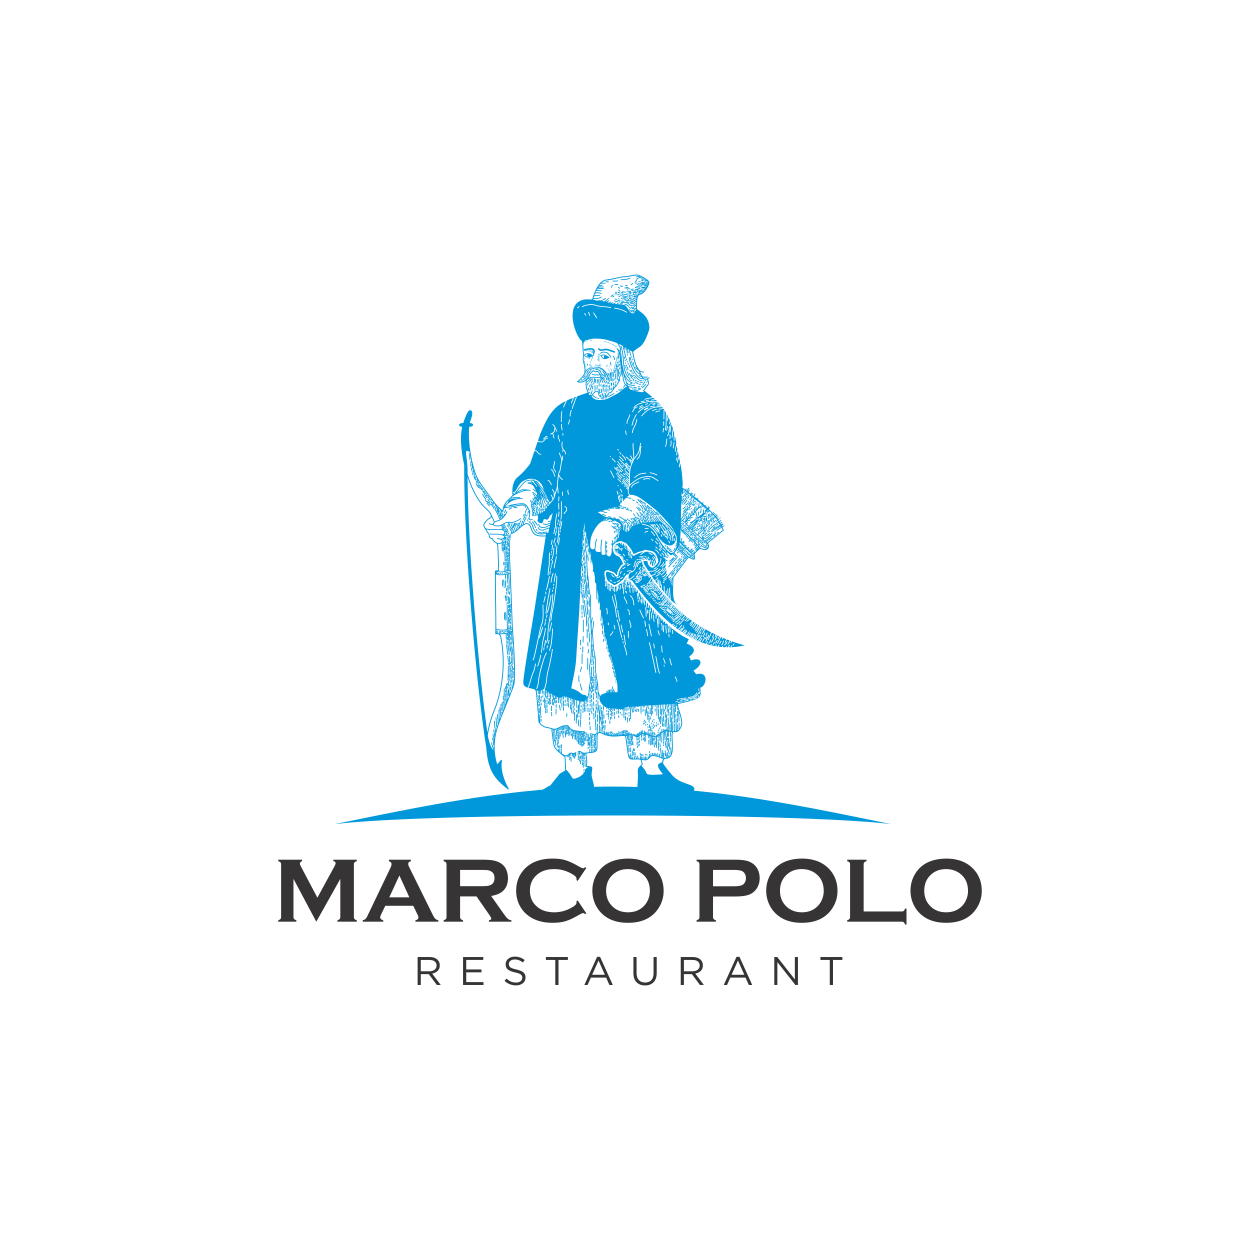 Marcopolo Logo - Upmarket, Elegant, Restaurant Logo Design for Marco Polo by -sevia ...